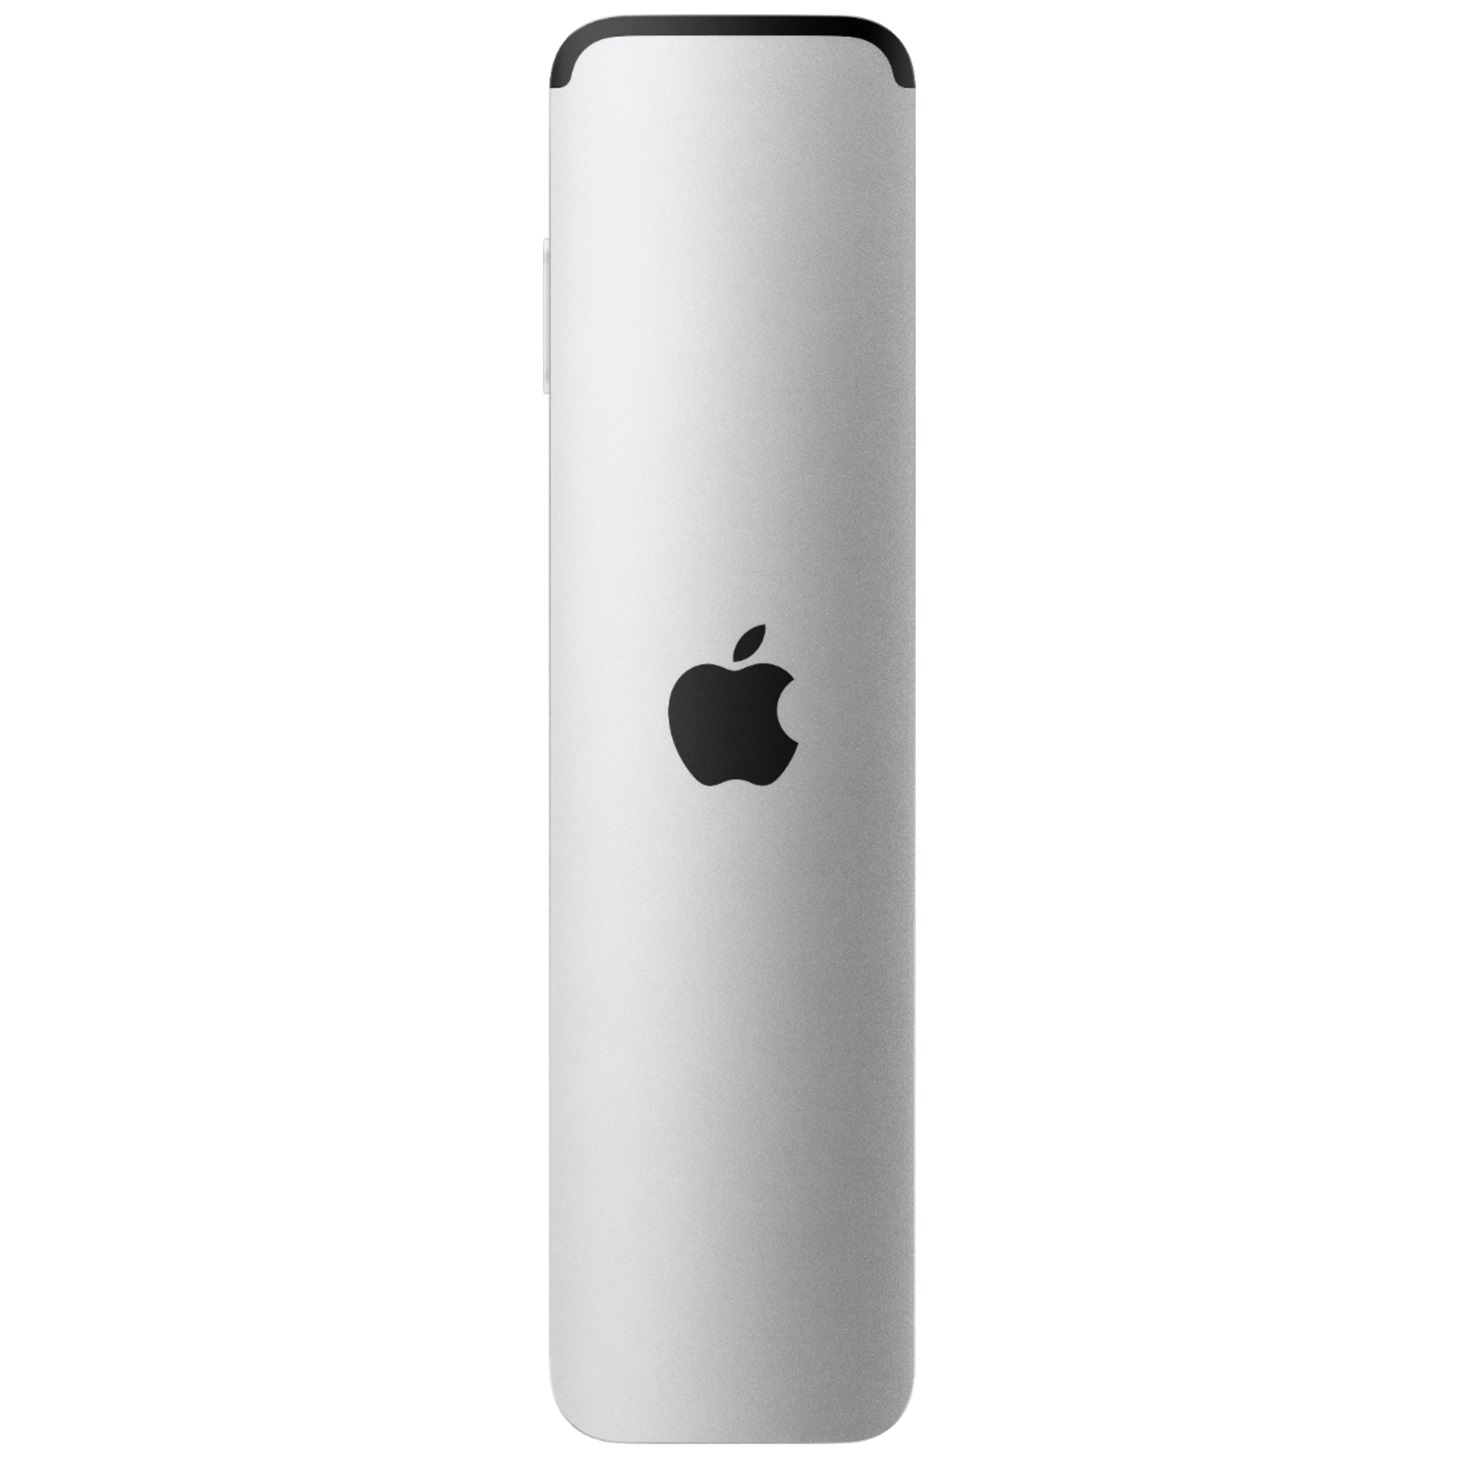 Apple Siri Remote MJFM3LL/A A2540 2nd Generation - Silver